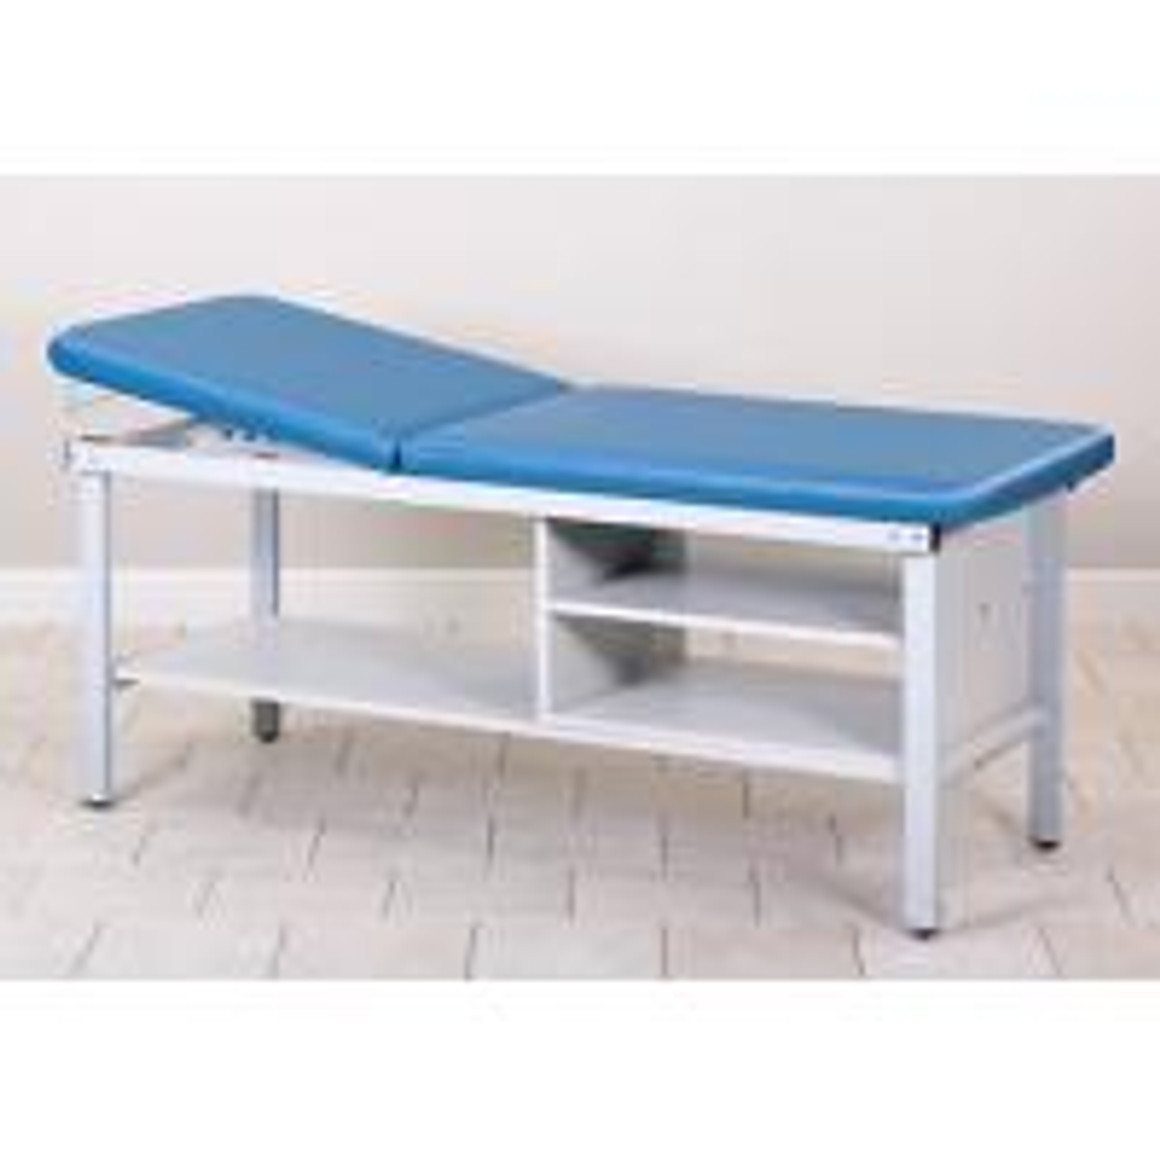 Clinton ETA Alpha Series Straight Line Treatment Table with Shelving Unit, 30" Wide, Royal Blue